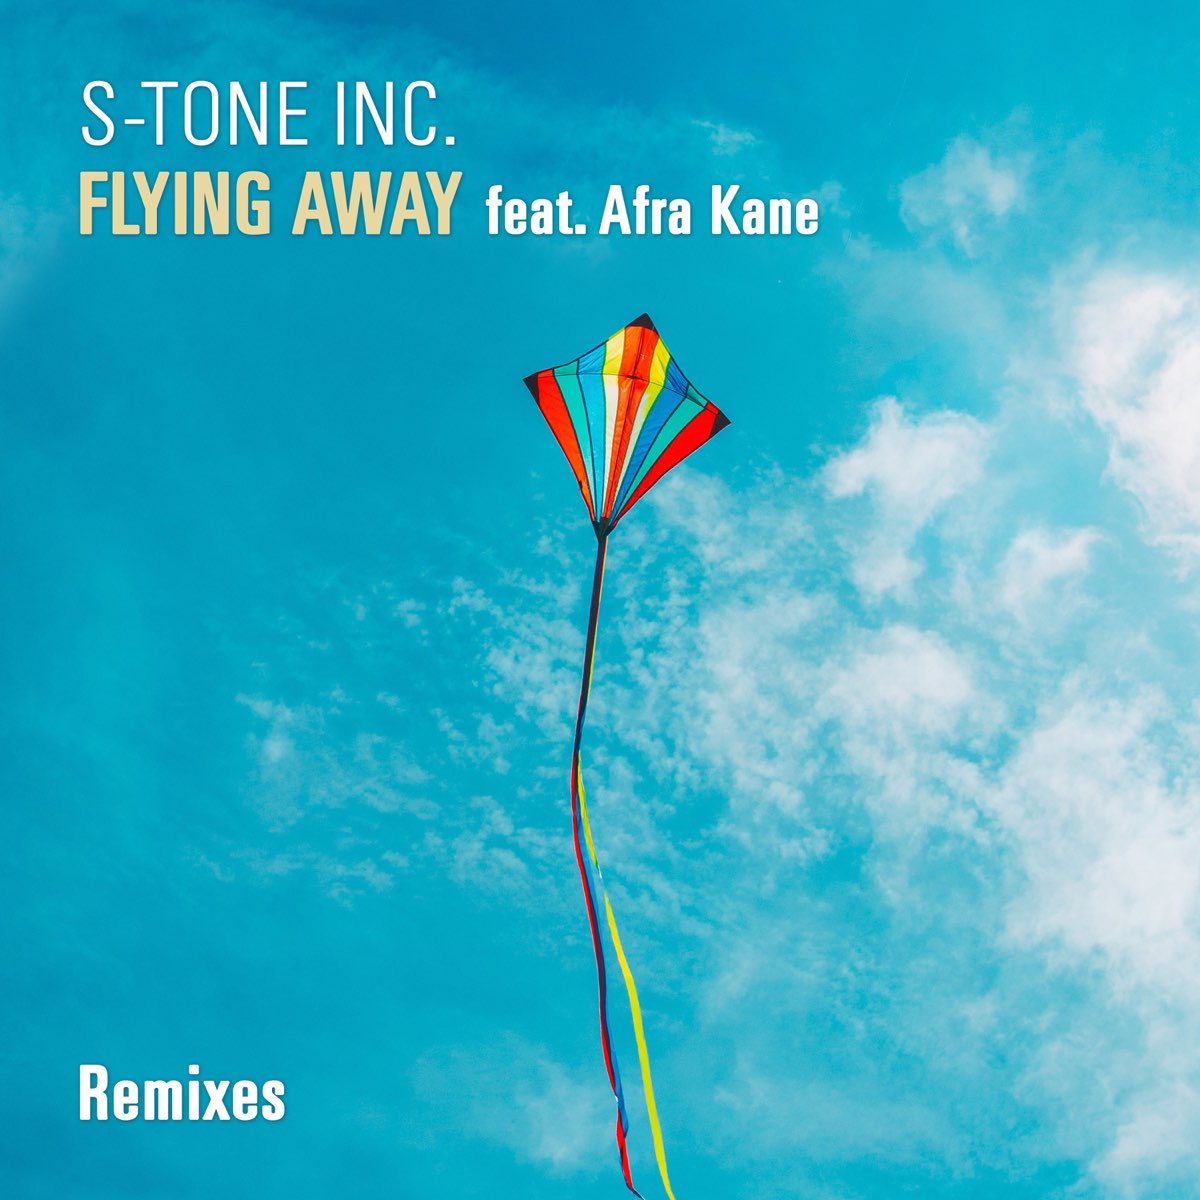 Tone remix. Flying away. Песня Fly away Fly away Fly away Fly away. Fly away.